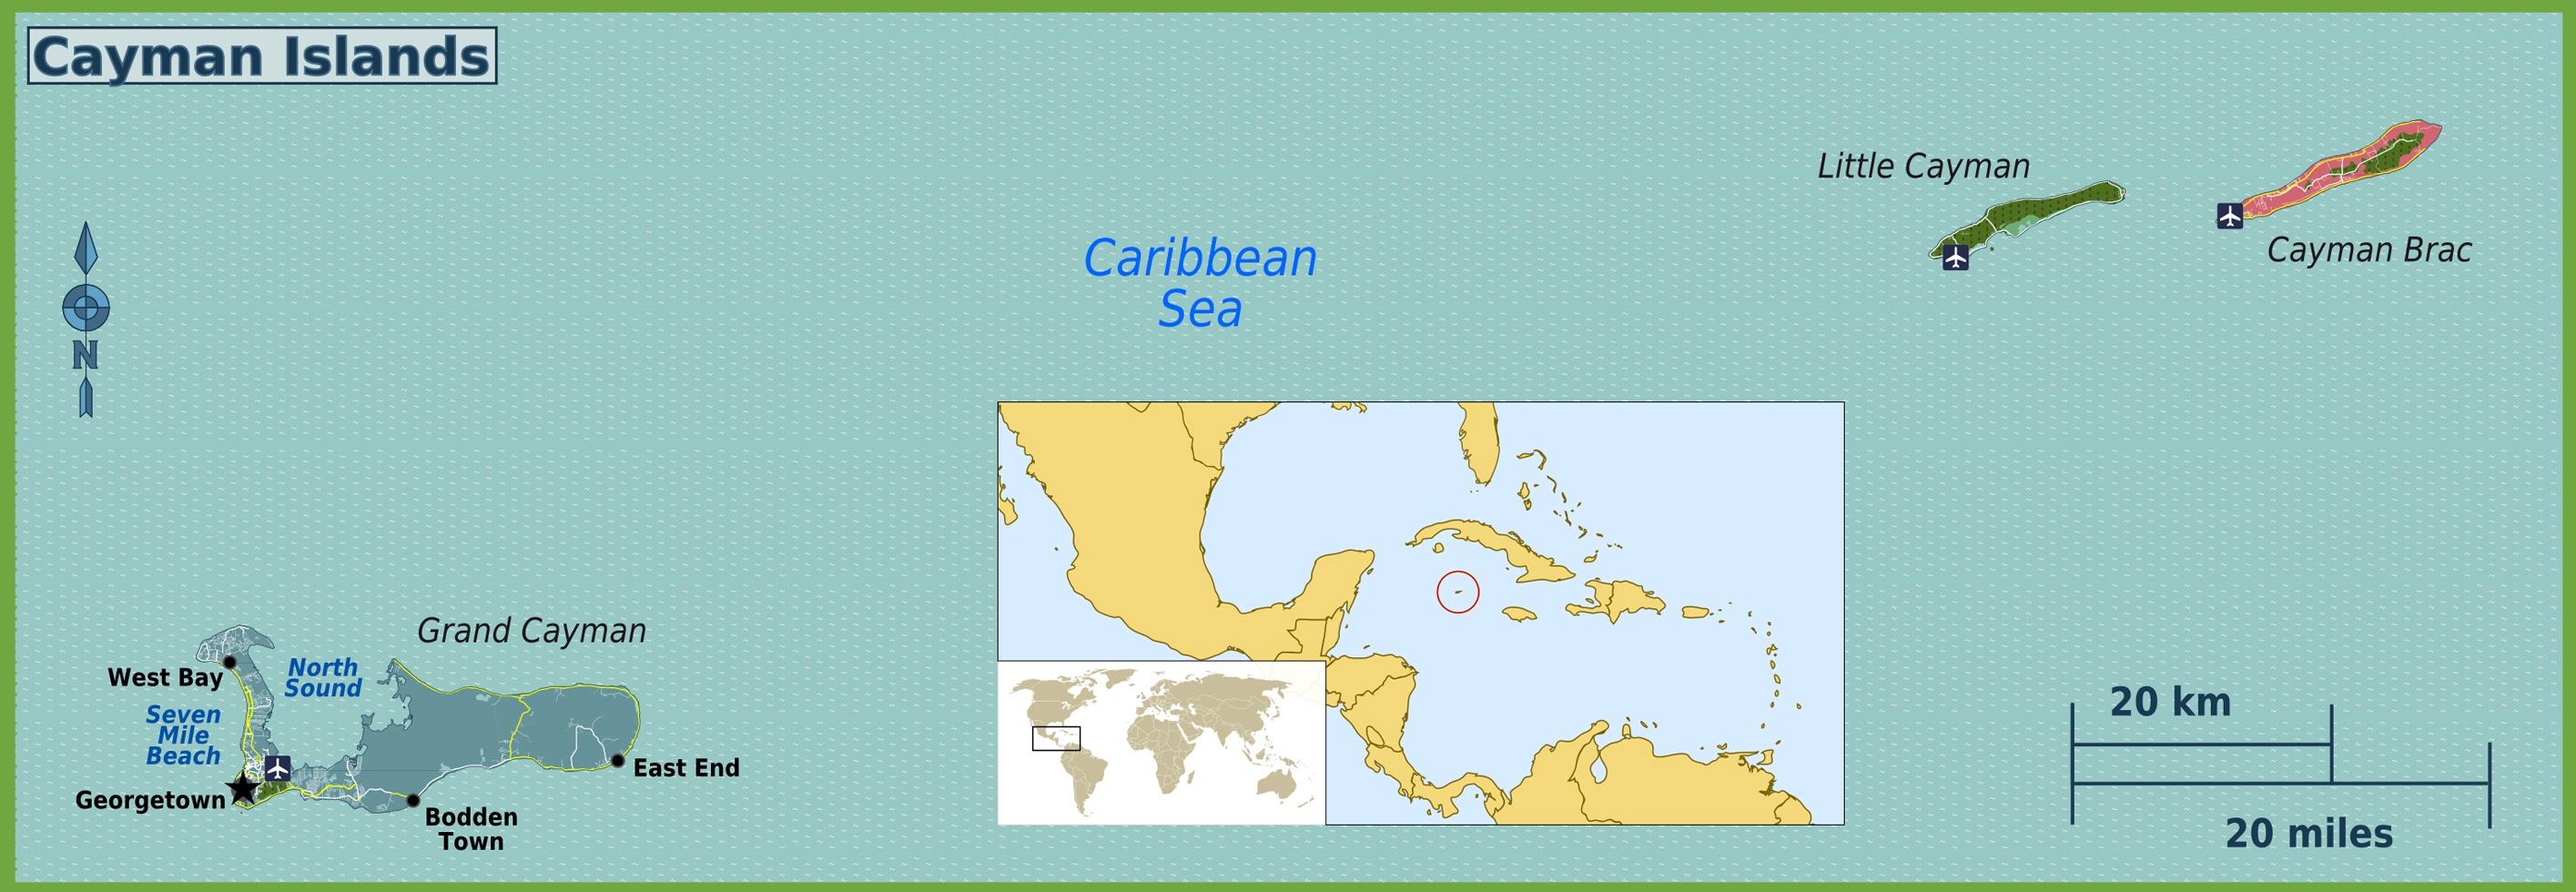 Maps of Cayman Islands. 